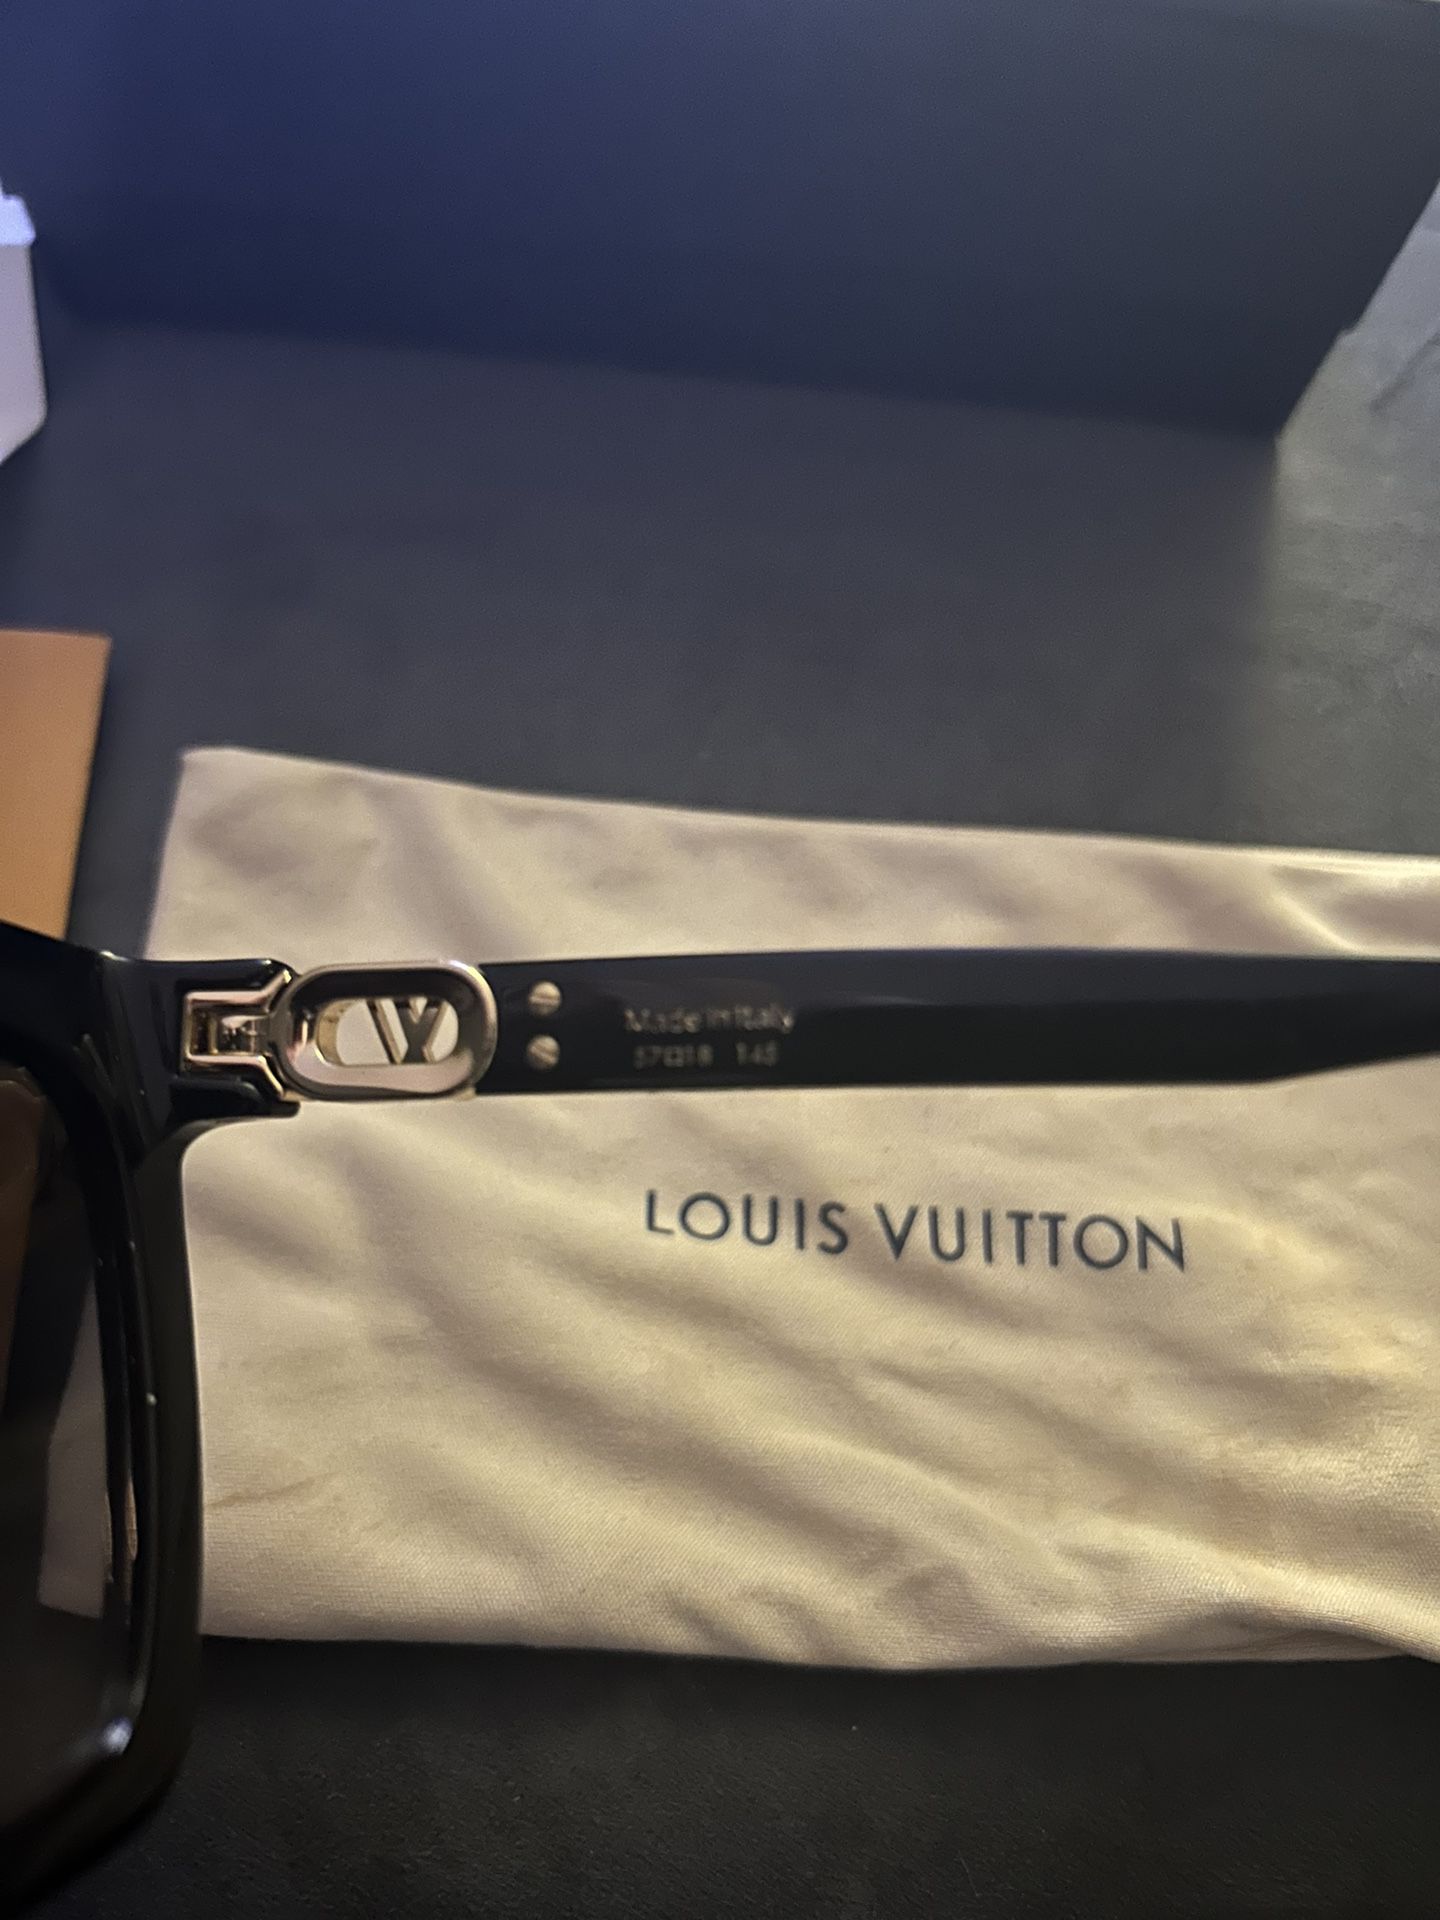 Louis Vuitton glasses Z0259U for Sale in Stanton, CA - OfferUp